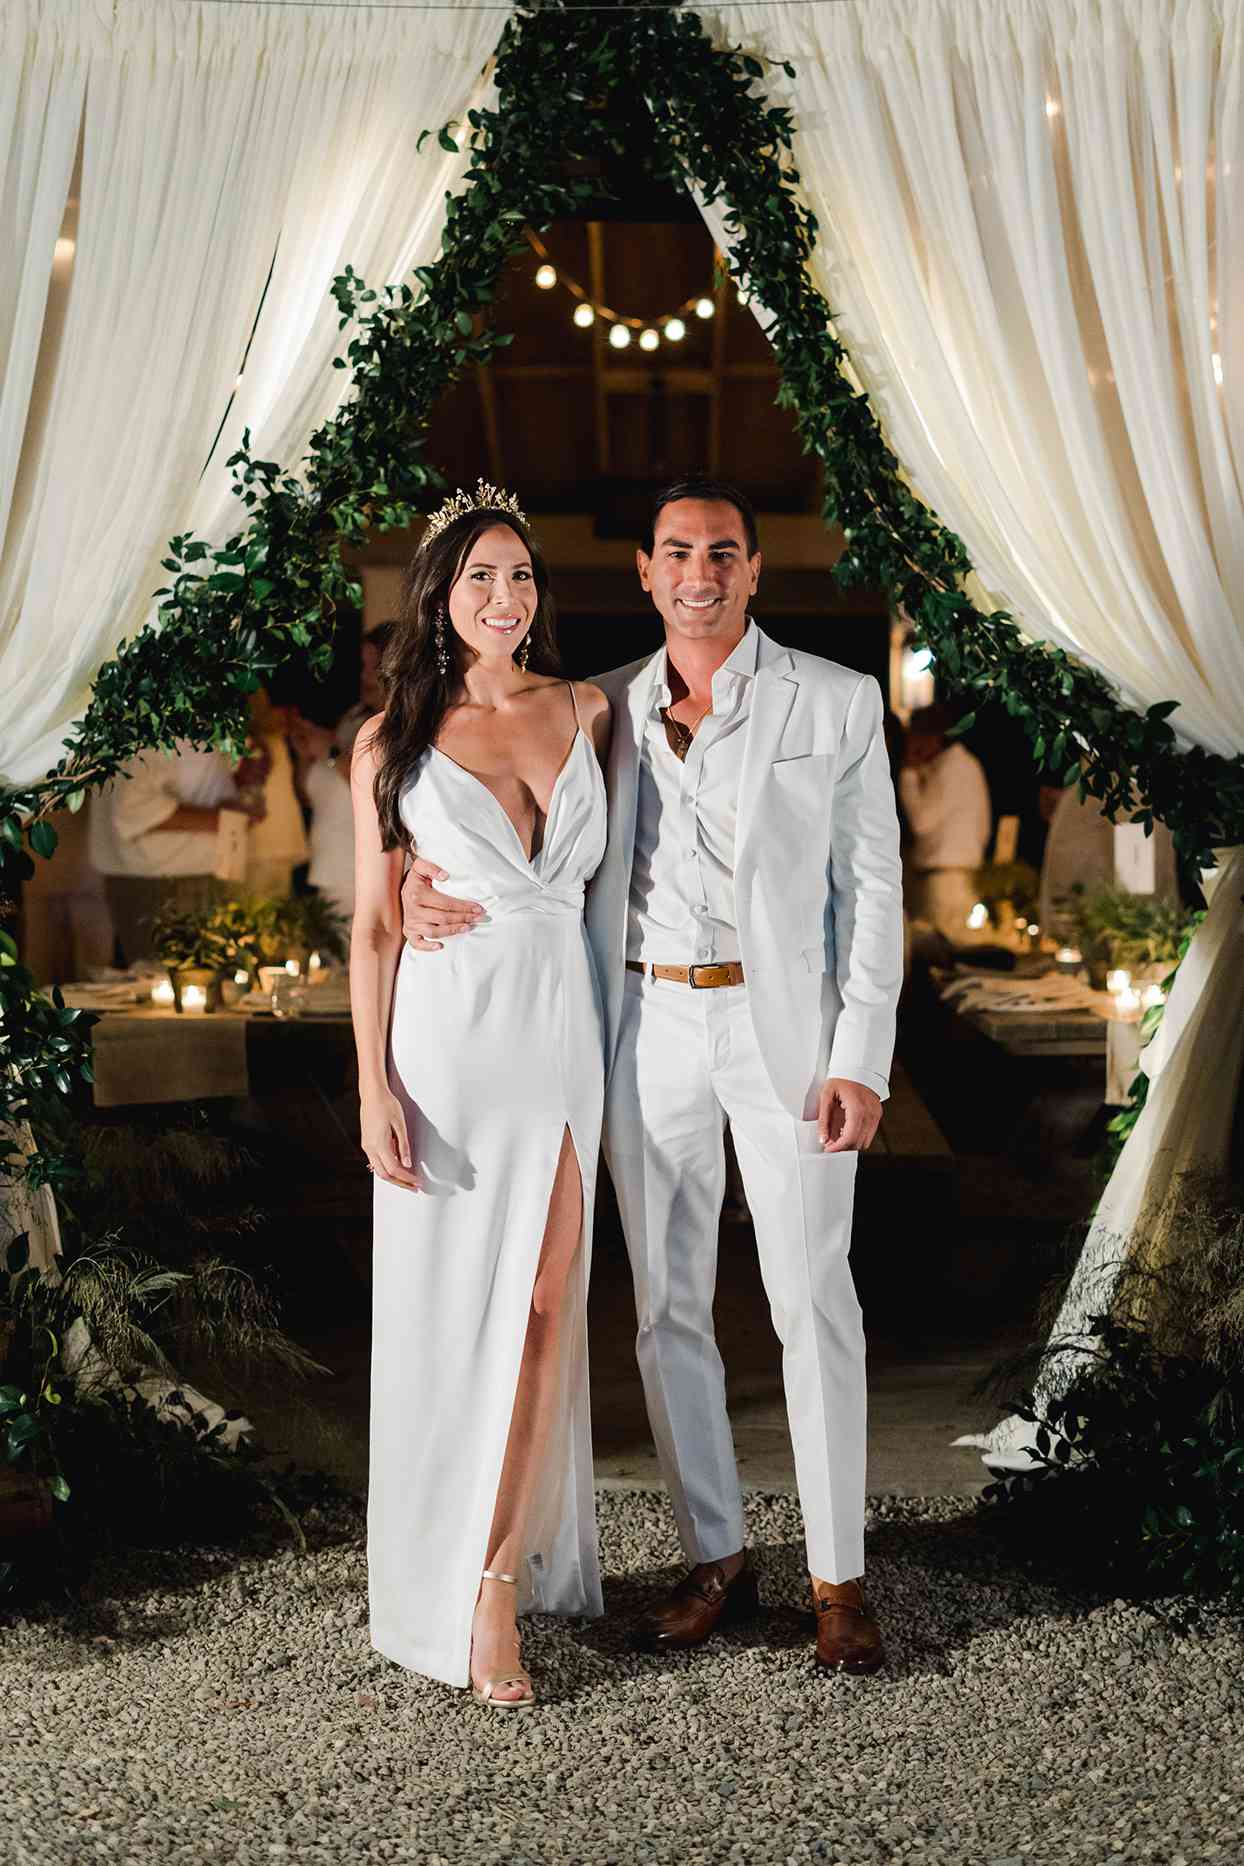 Greek Concept Wedding Reception Dress